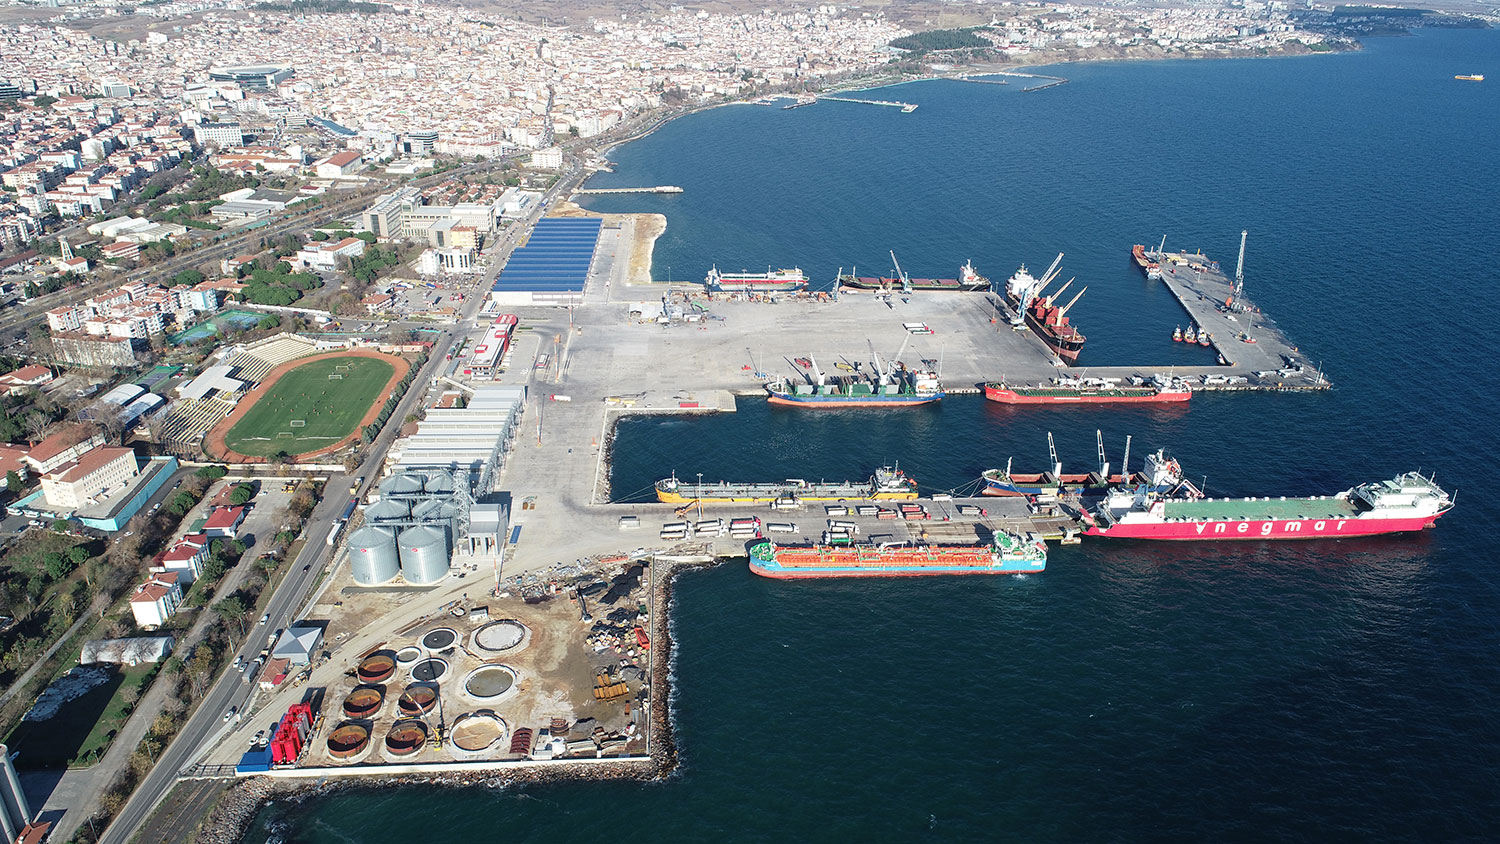 Süleymanpaşa Ceyport Limanı: "Aleni suç işlendi" - Atölye BİA